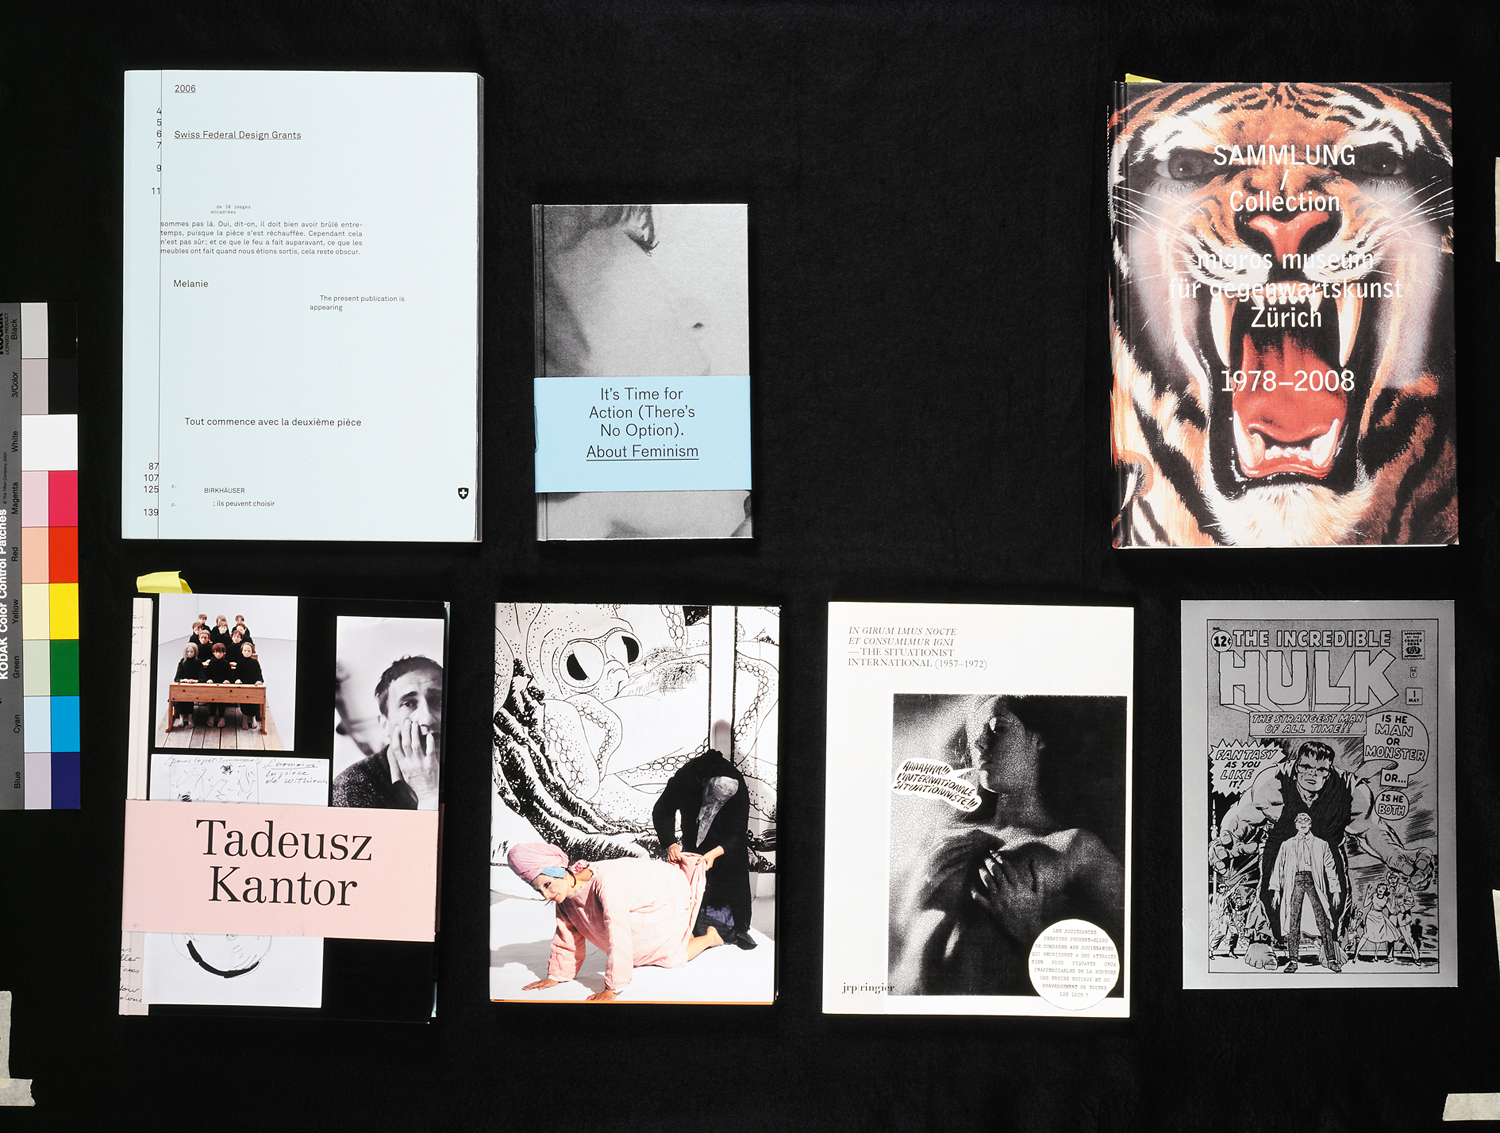 prämierte Publikationen (2001 - 2009). 'Bourses fédérales de design 2006' (2006), 'It's Time for Action (There's No Option). About Feminism' (2007), 'Tadeusz Kantor' (2009), 'Spartacus Chetwynd' (2007), 'SAMMLUNG/Collection migros museum für gegenwartskunst Zürich 1978 - 2008' (2008), 'The Situationist International 1957 - 1972' (2007), 'The Incredible Hulk' in: 'Spartacus Chetwynd' (2007)